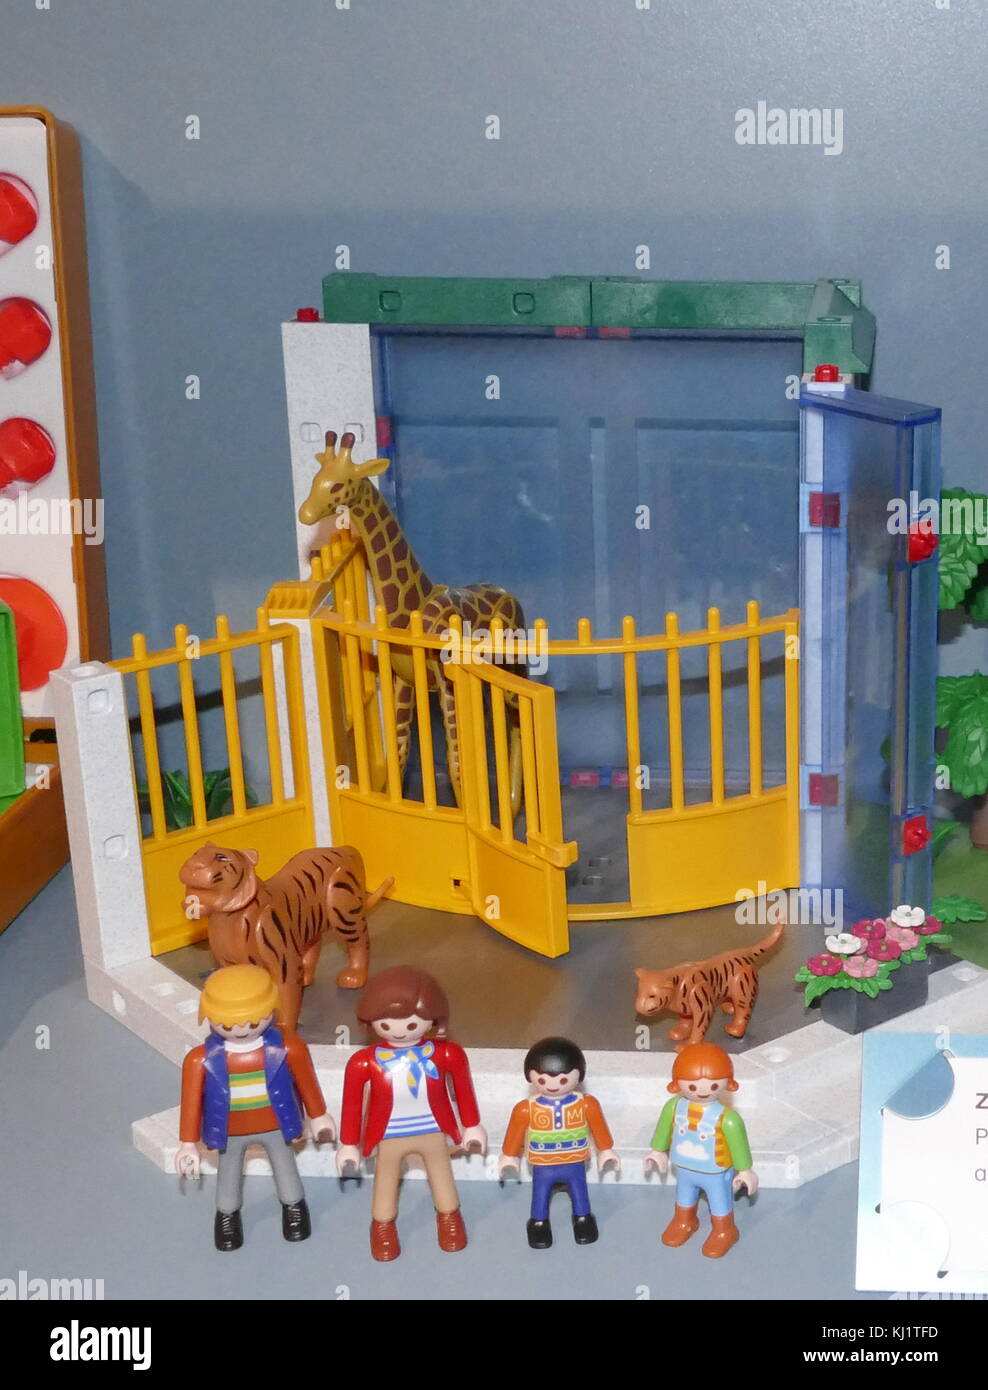 Playmobil zoo set in plastic 2006 Stock Photo - Alamy